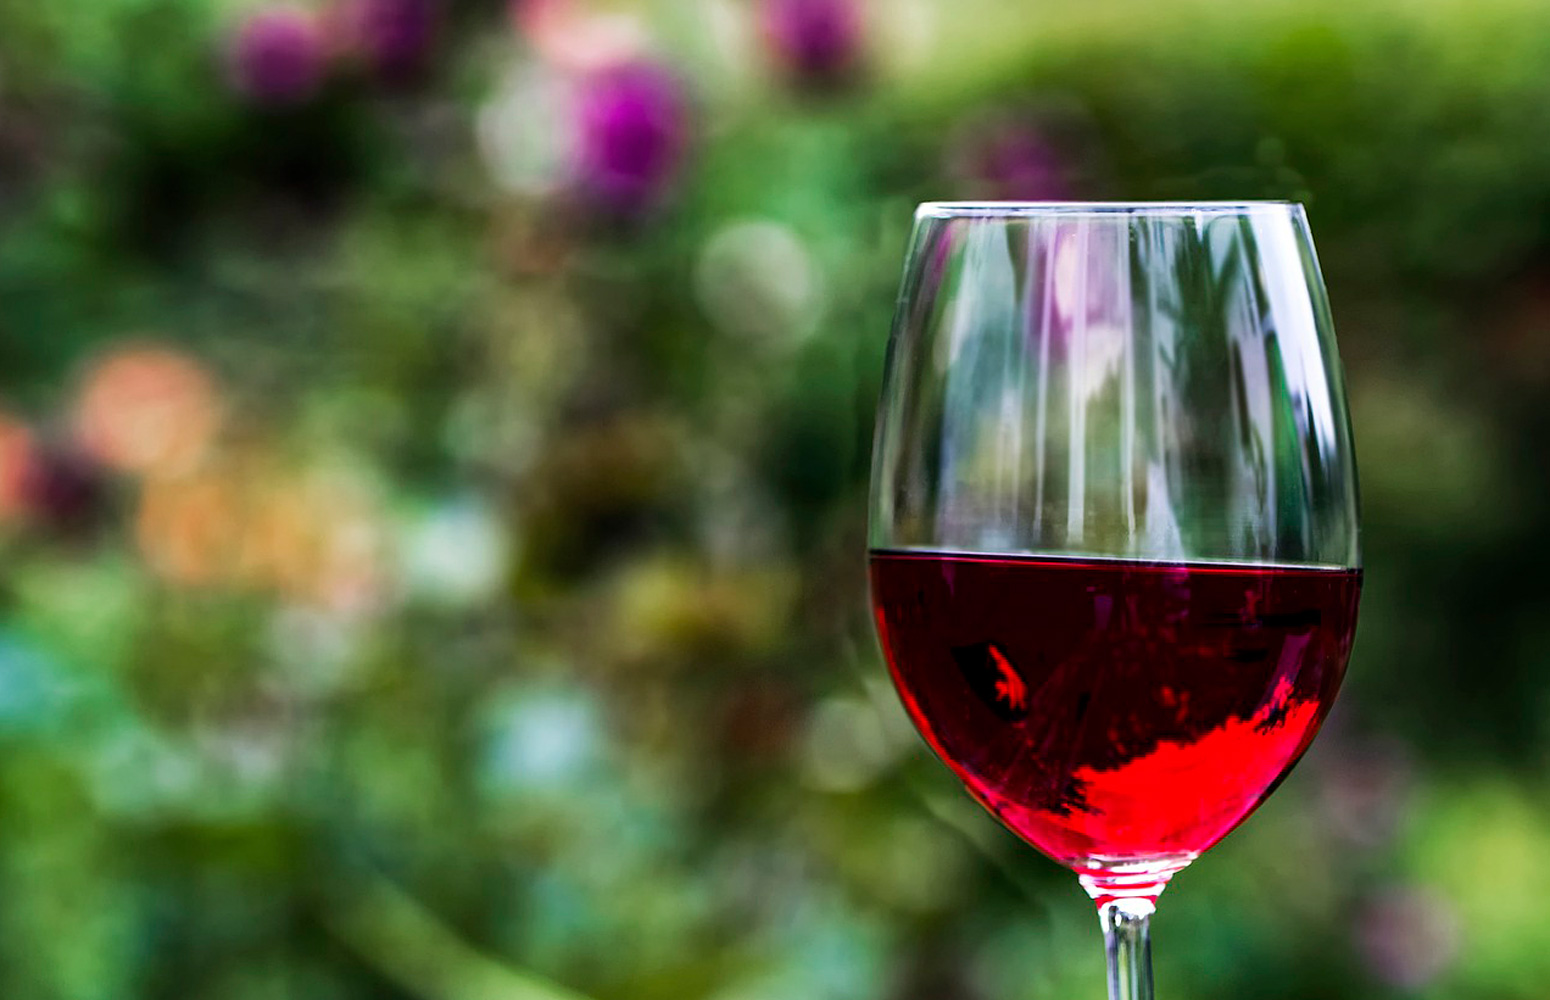 Standard methodology for the sensory analysis of wine